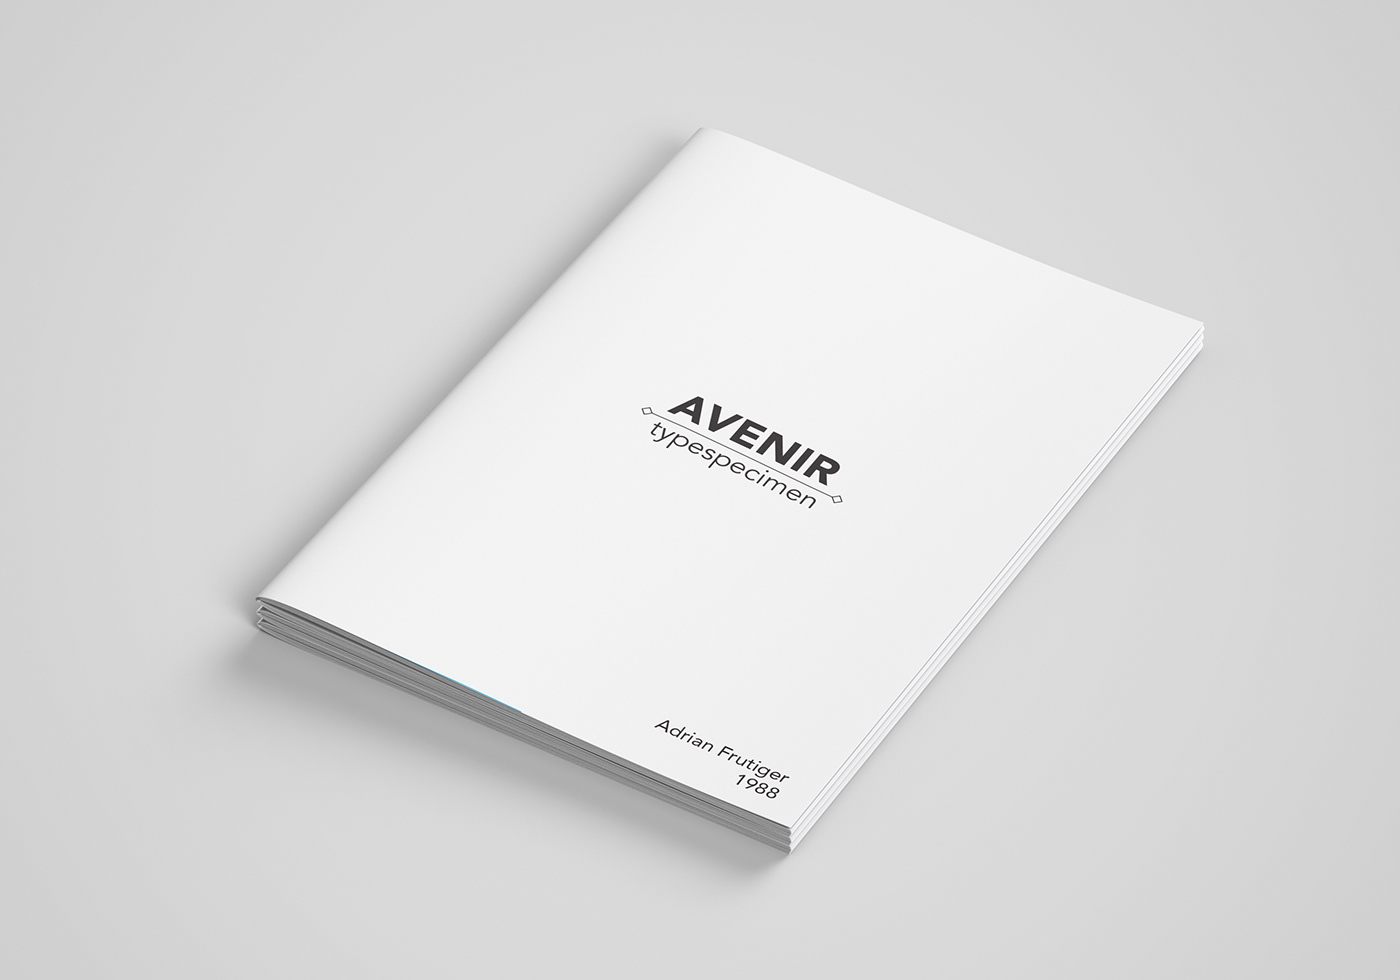 Adobe CC avenir book design book making graphic design  print publishing design type Type Specimen typography  